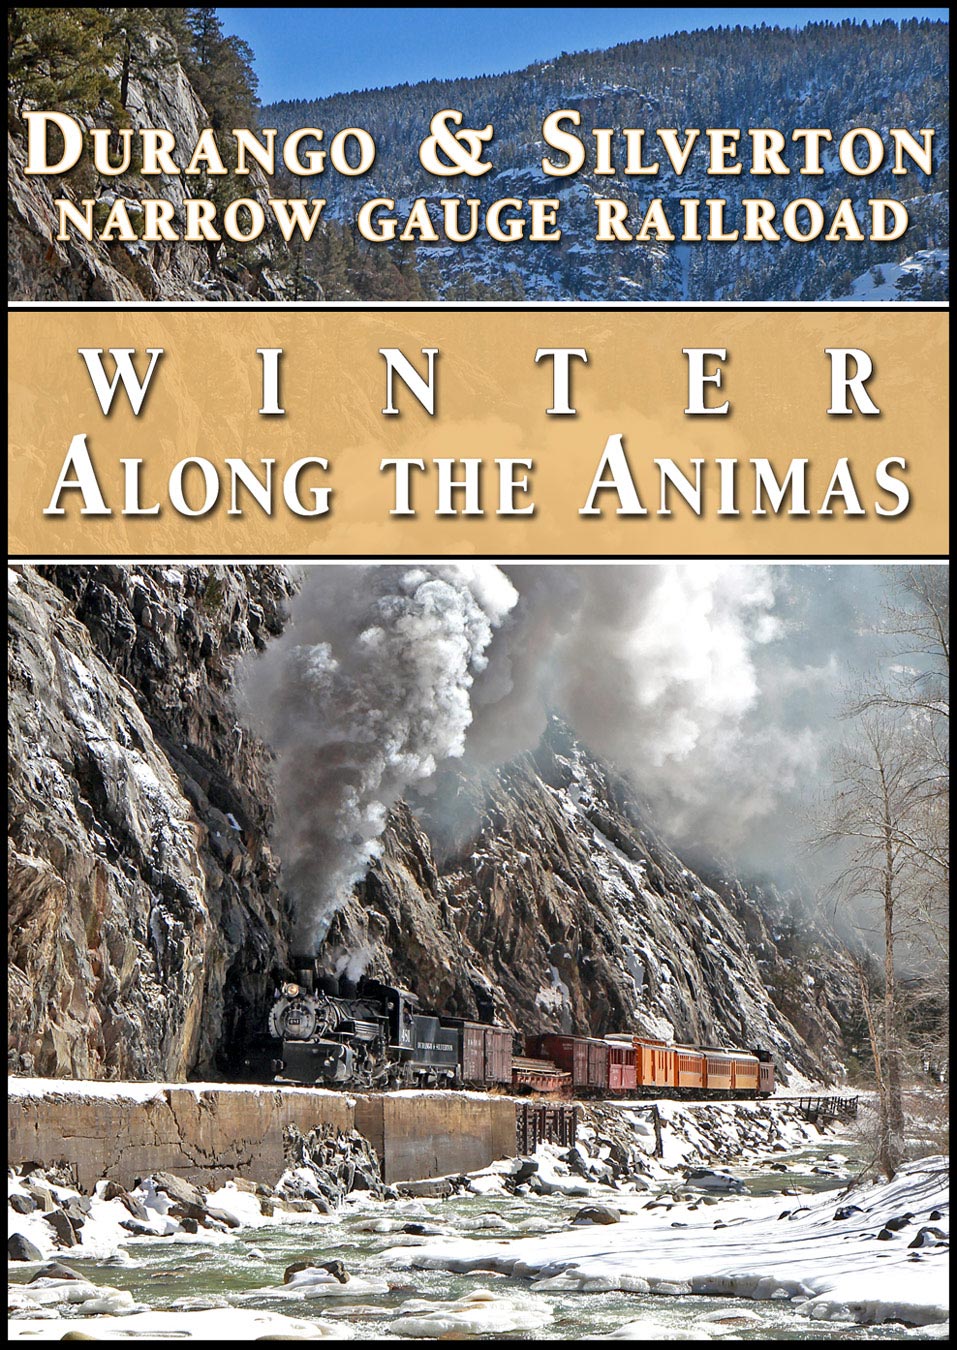 Durango & Silverton Winter Along the Animas DVD Steam Video Productions SVPWAAD